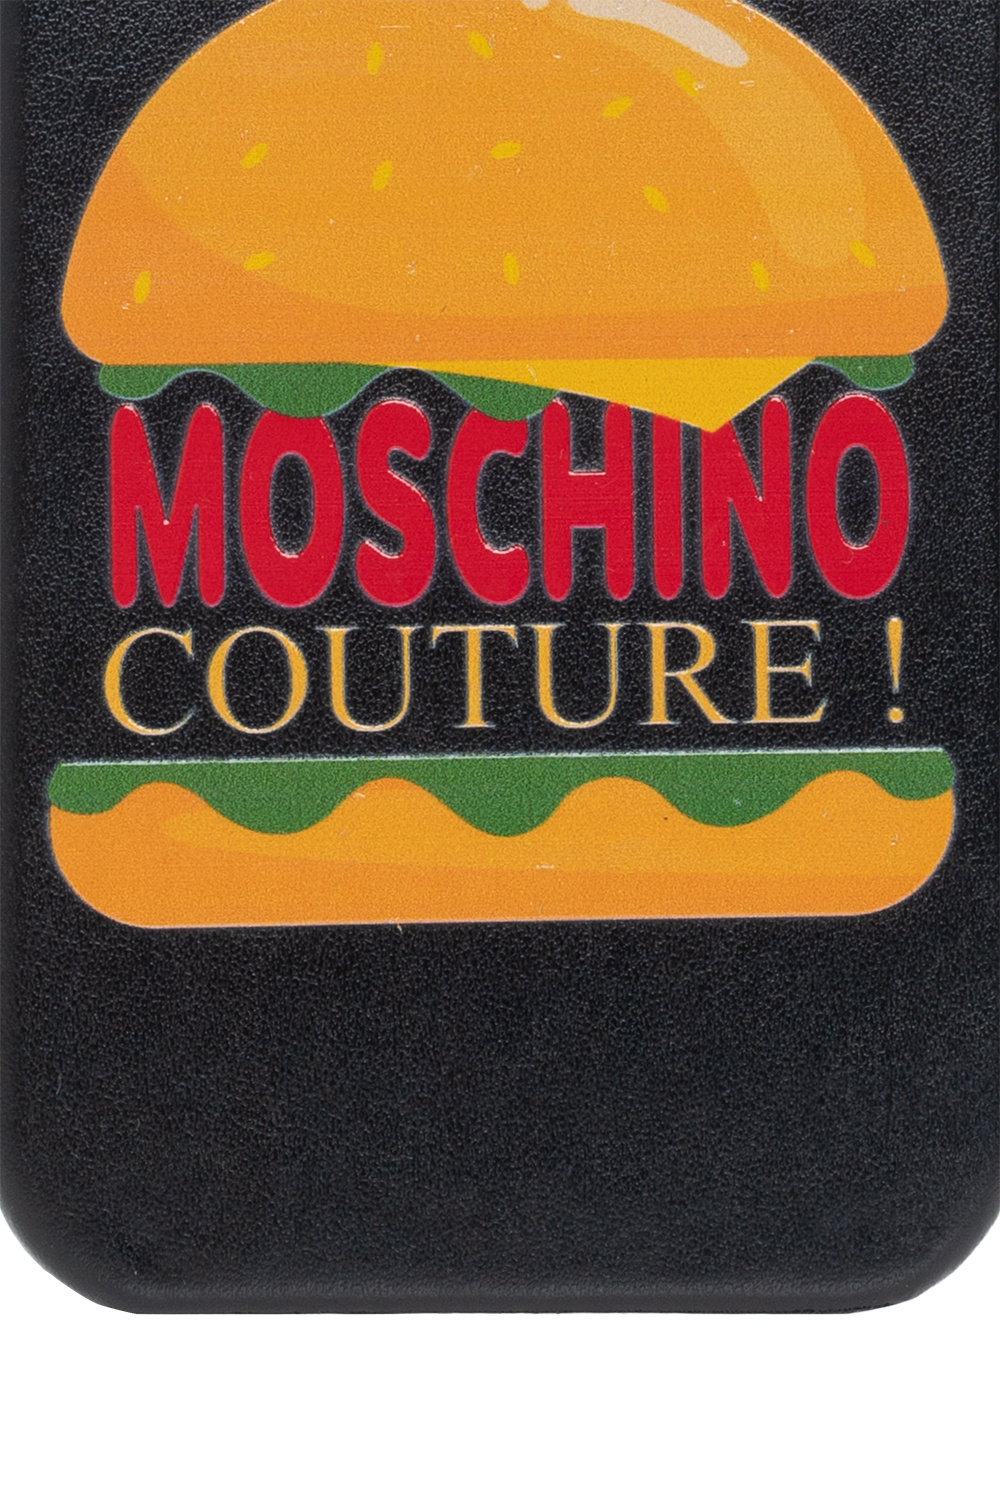 Moschino iPhone 12 Pro Max case